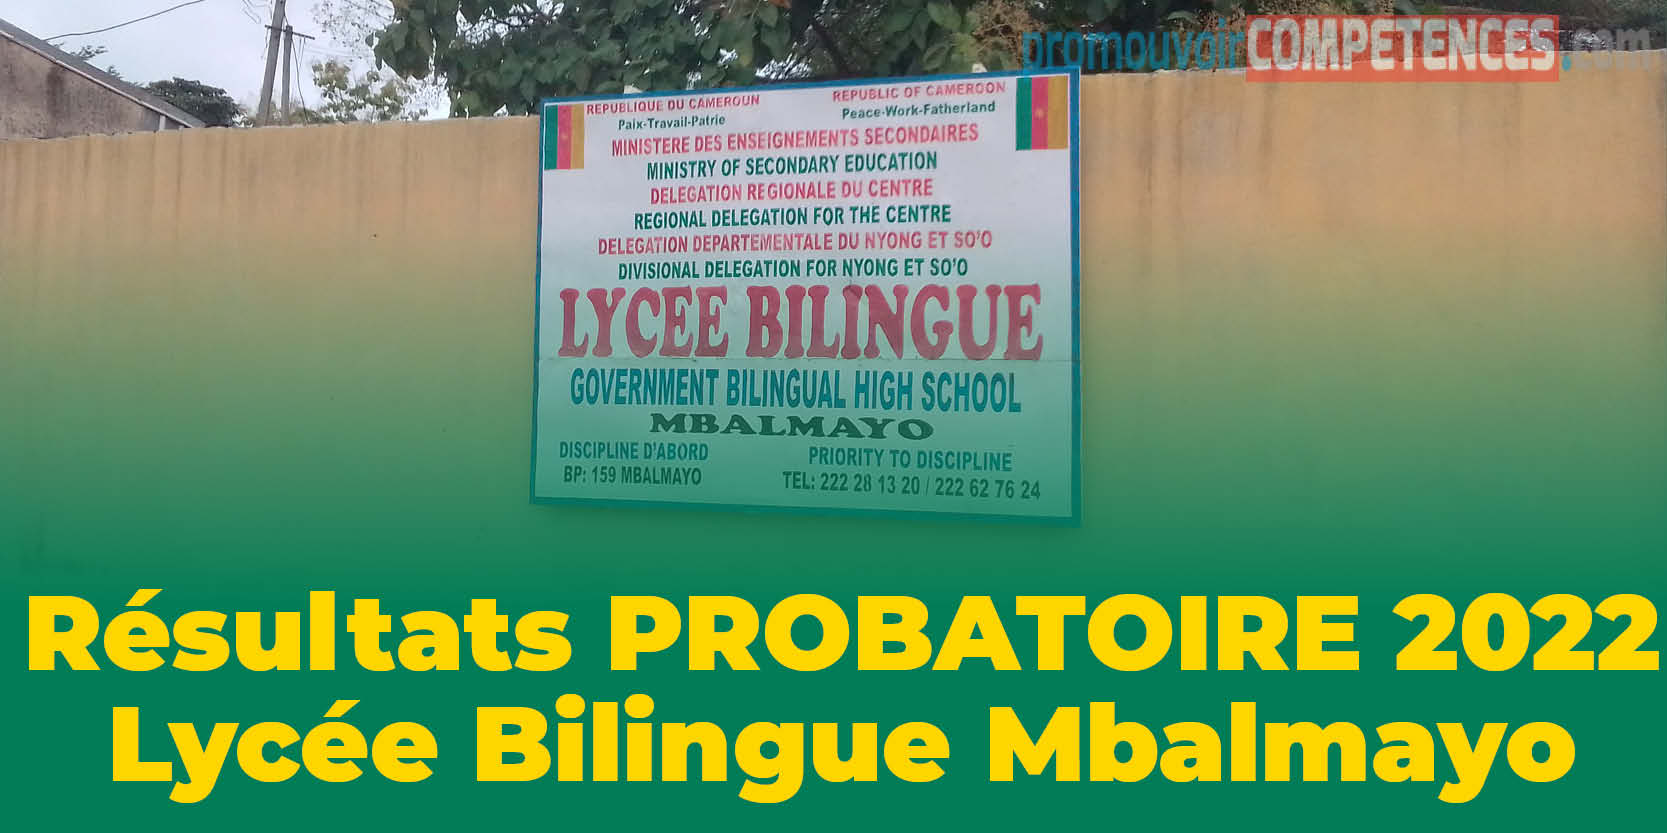 Résultats Probatoire Général 2022 - Lycée Bilingue de Mbalmayo - Cameroun